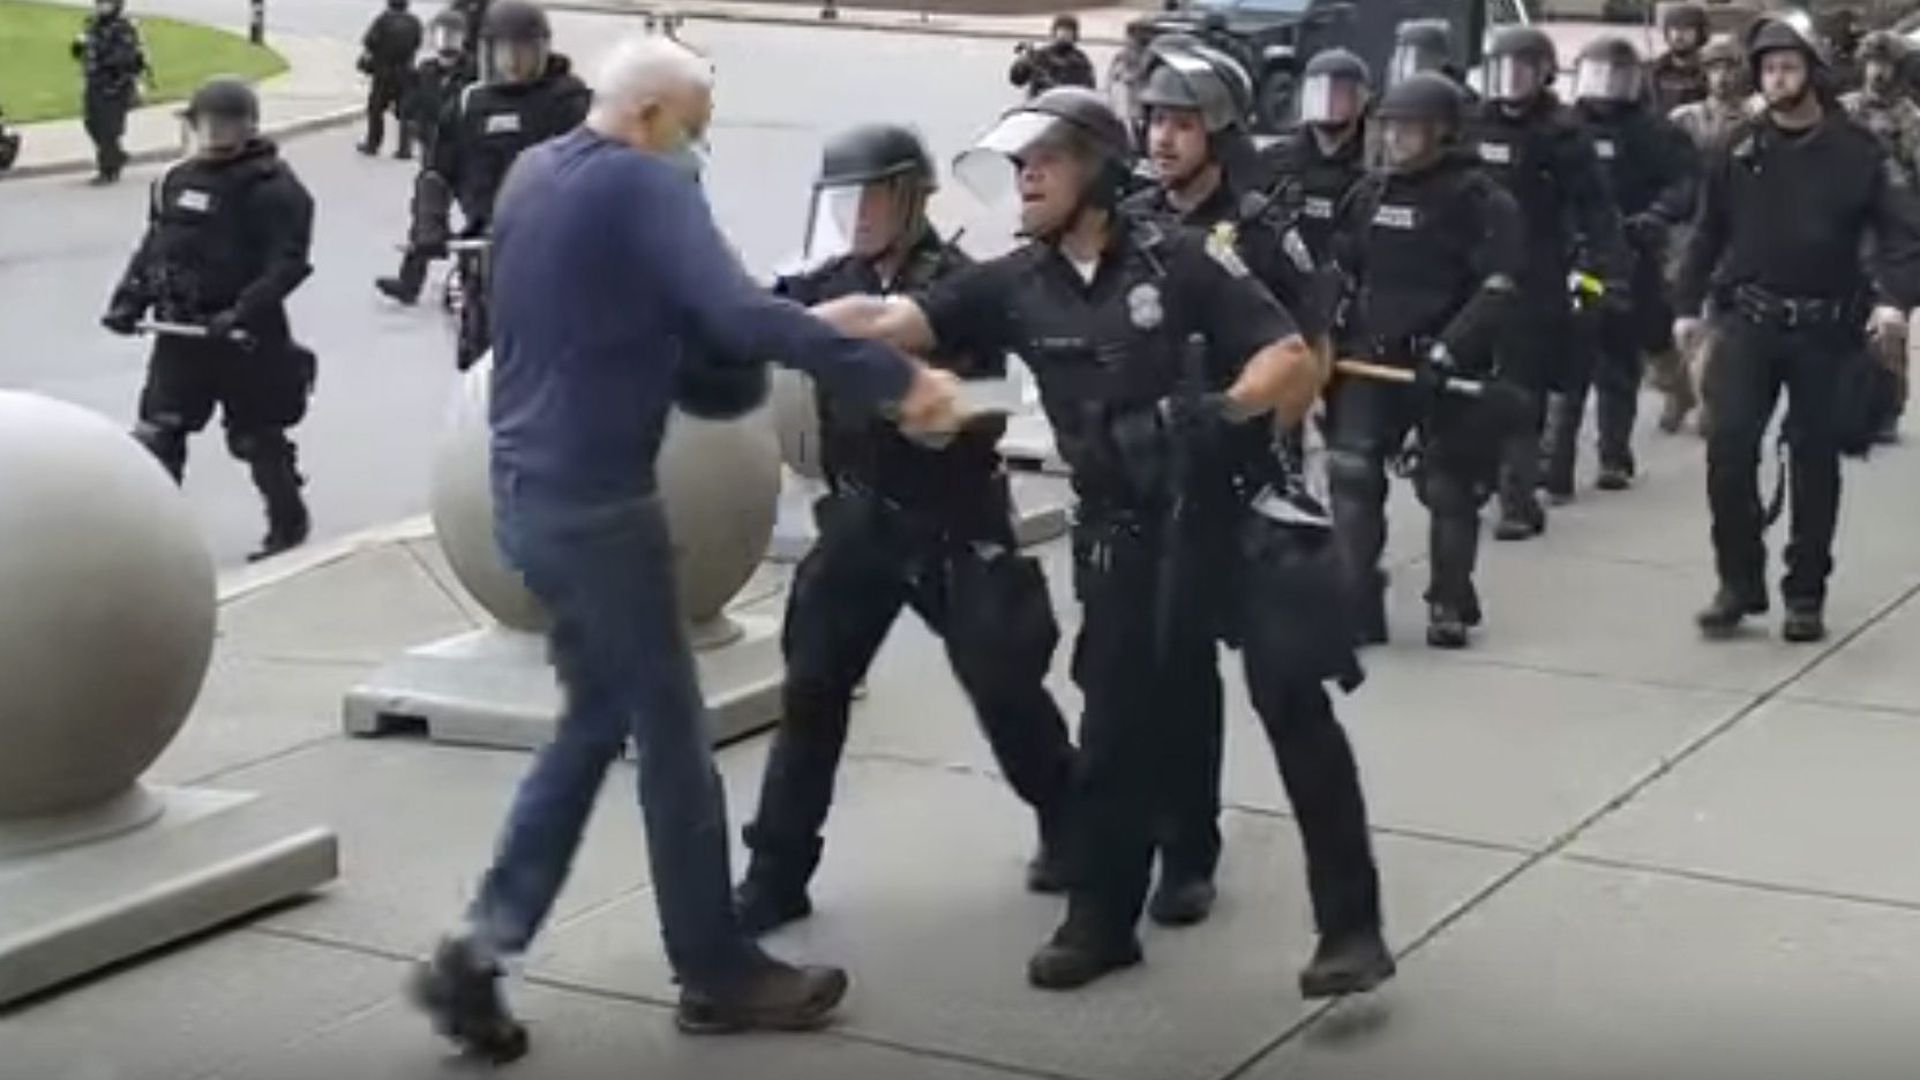 Police shoving an elderly man.